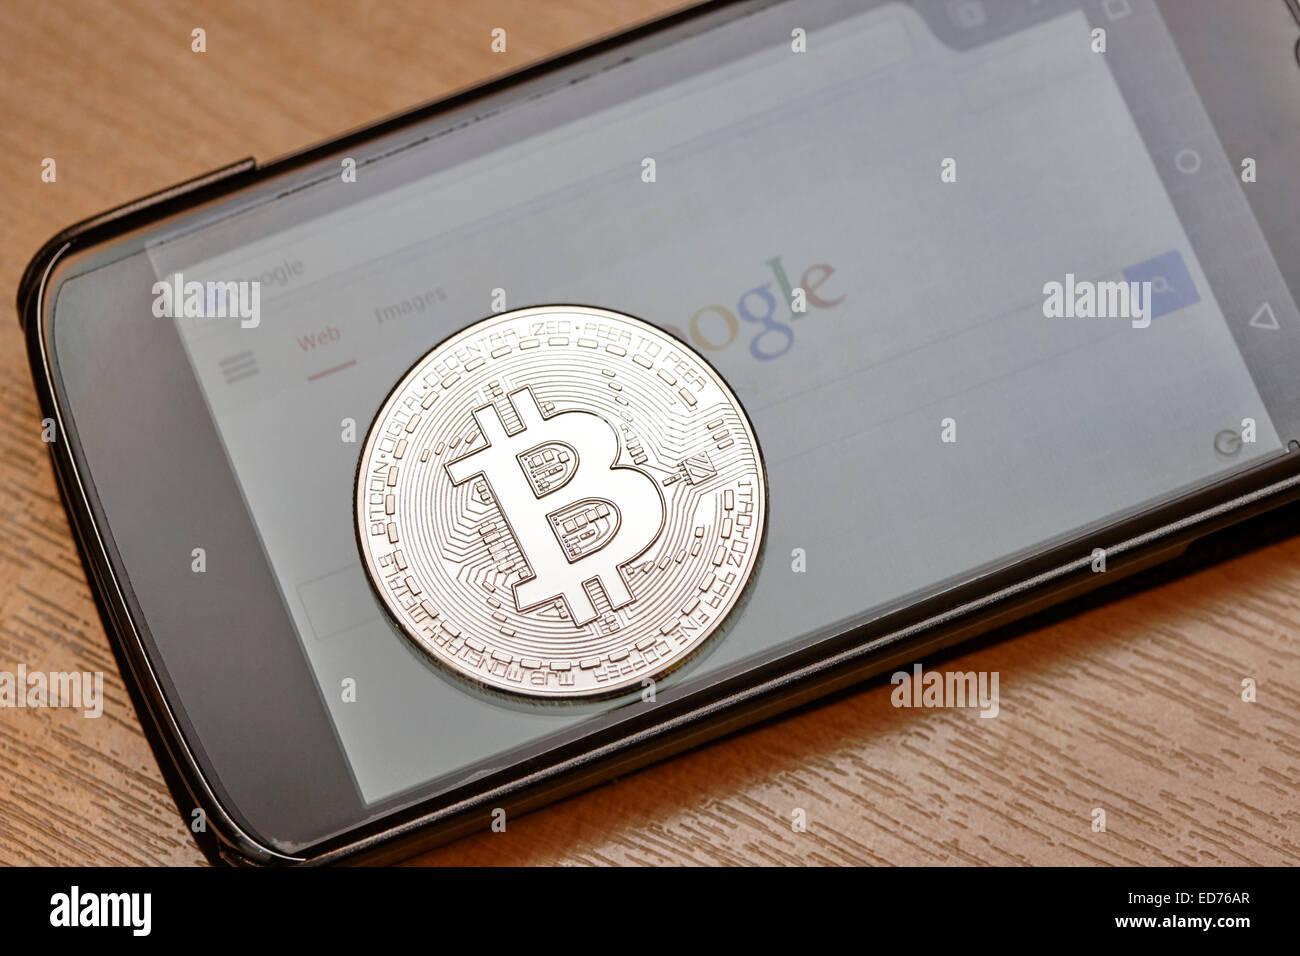 Bitcoin moneta virtuale moneta su uno smartphone Foto Stock